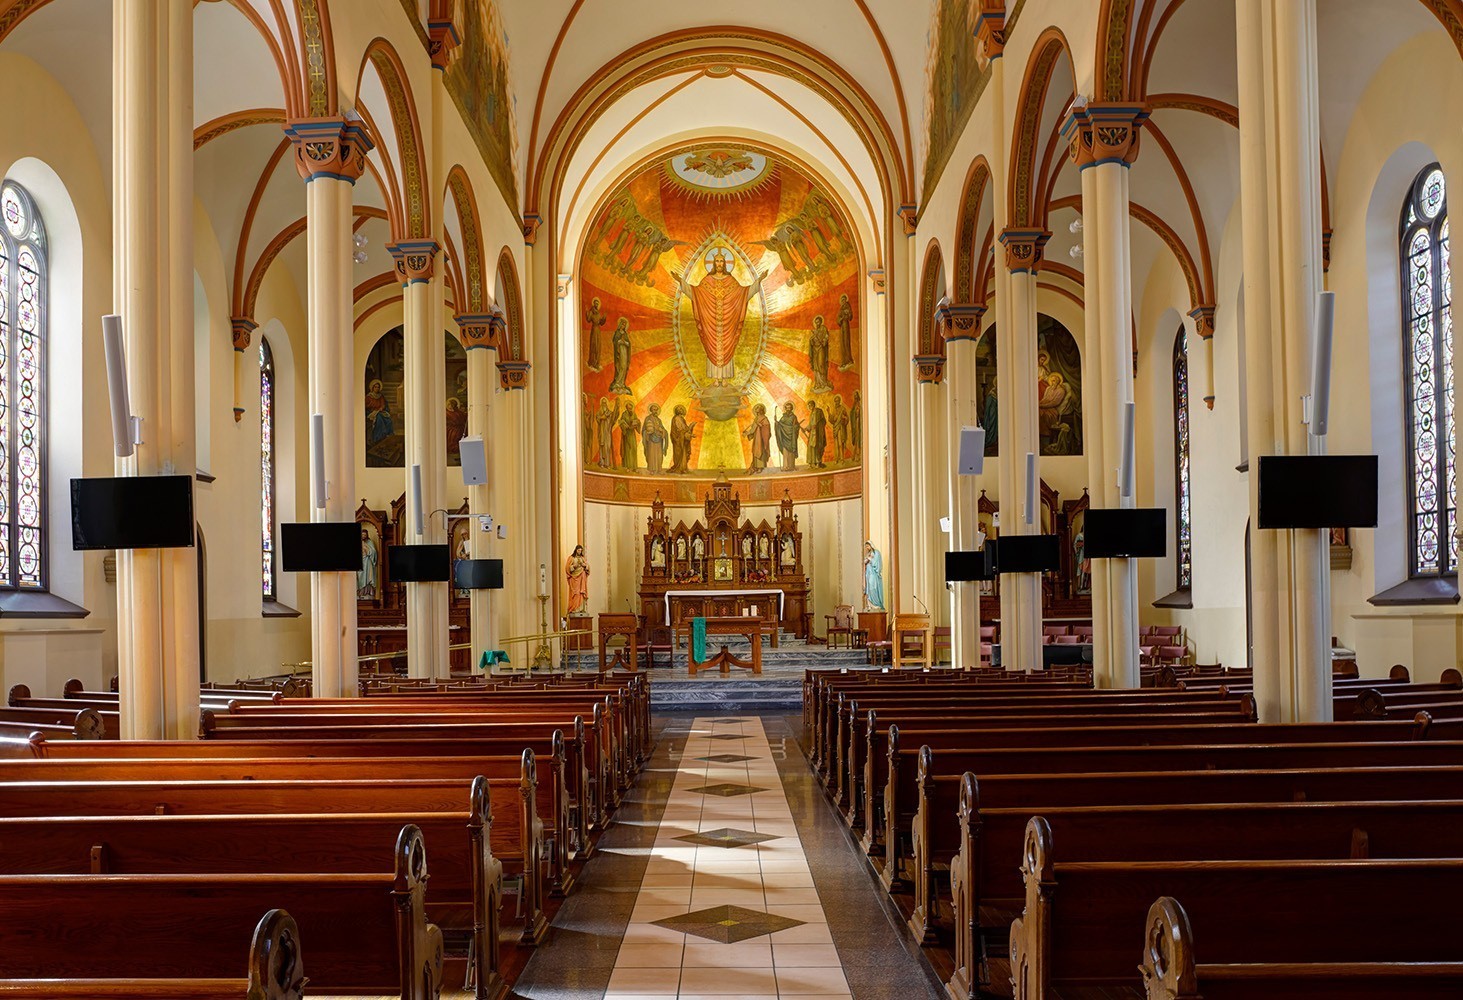 Saint Anthony's Catholic Church: Over 323 Royalty-Free Licensable